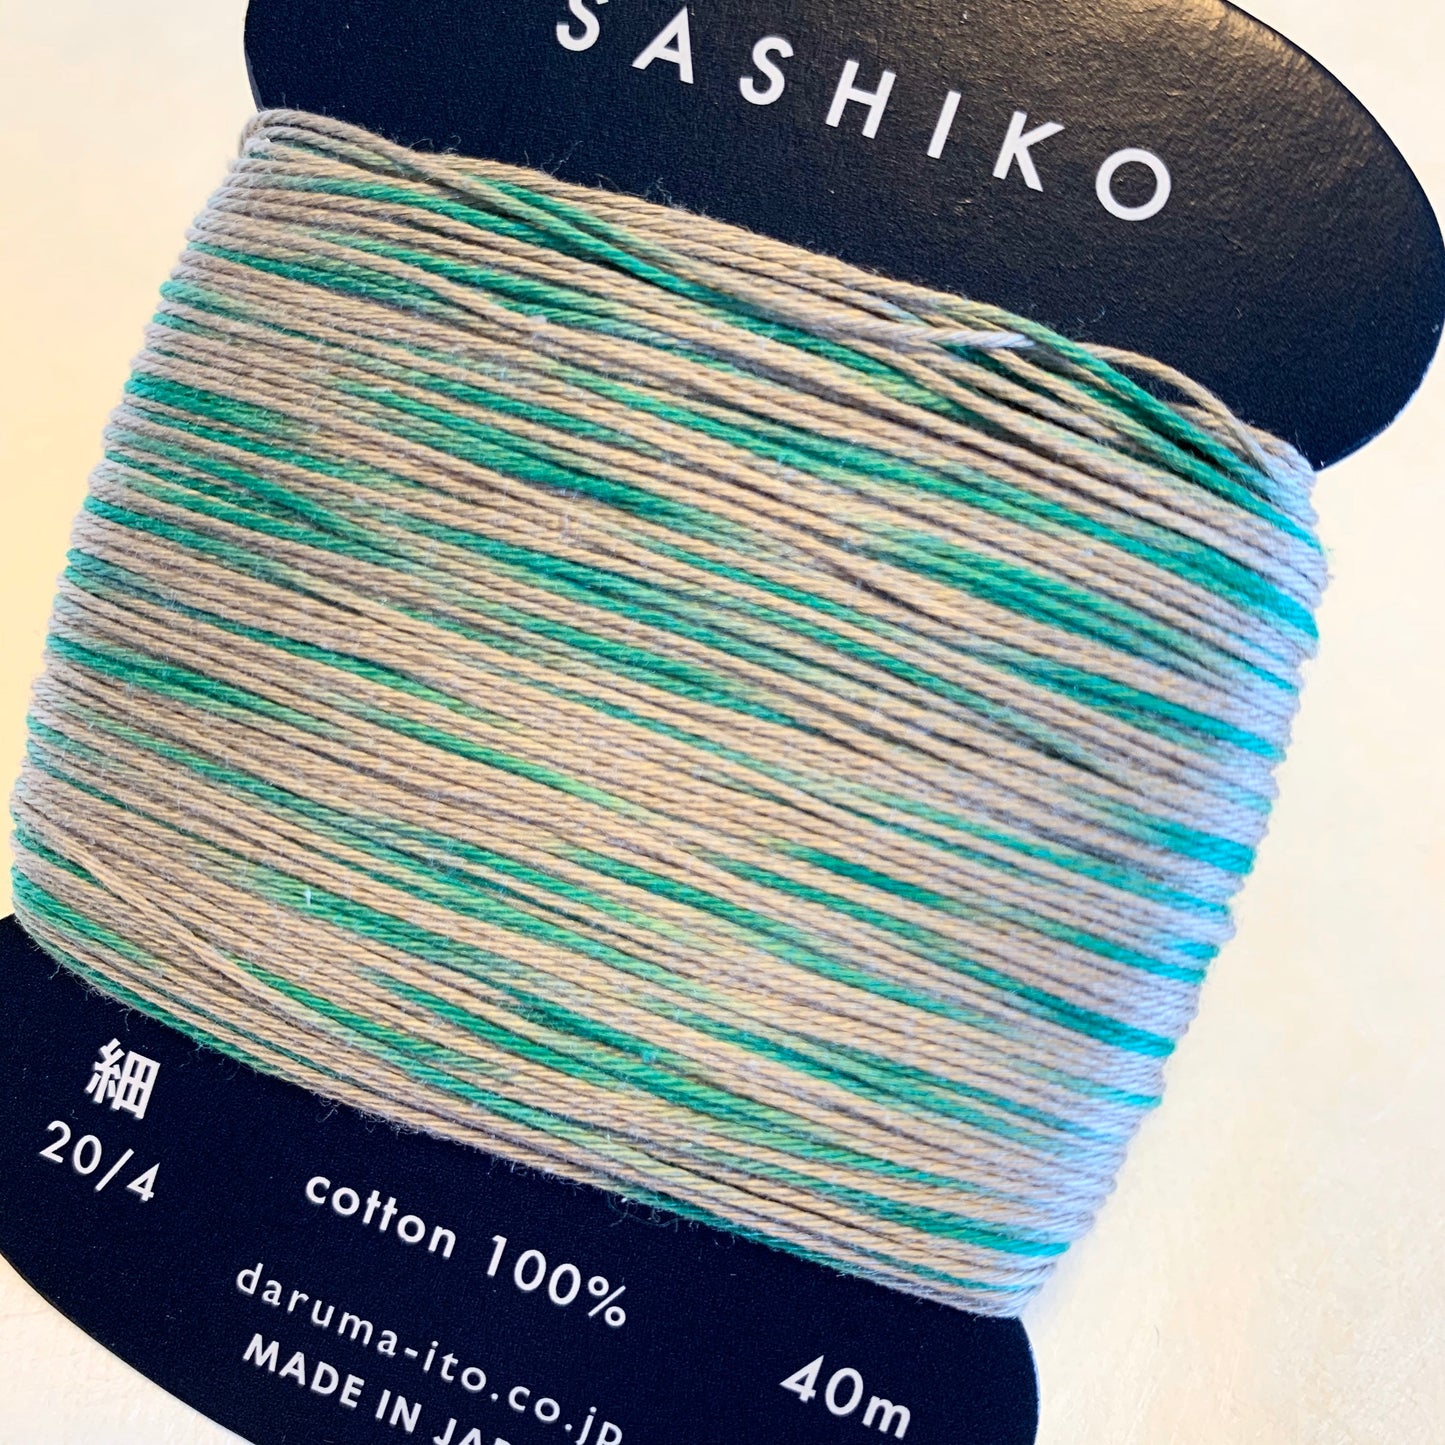 Daruma #301 "RAIN SOUNDS" variegated gray and green Japanese Cotton SASHIKO thread 40 meter skein 20/4